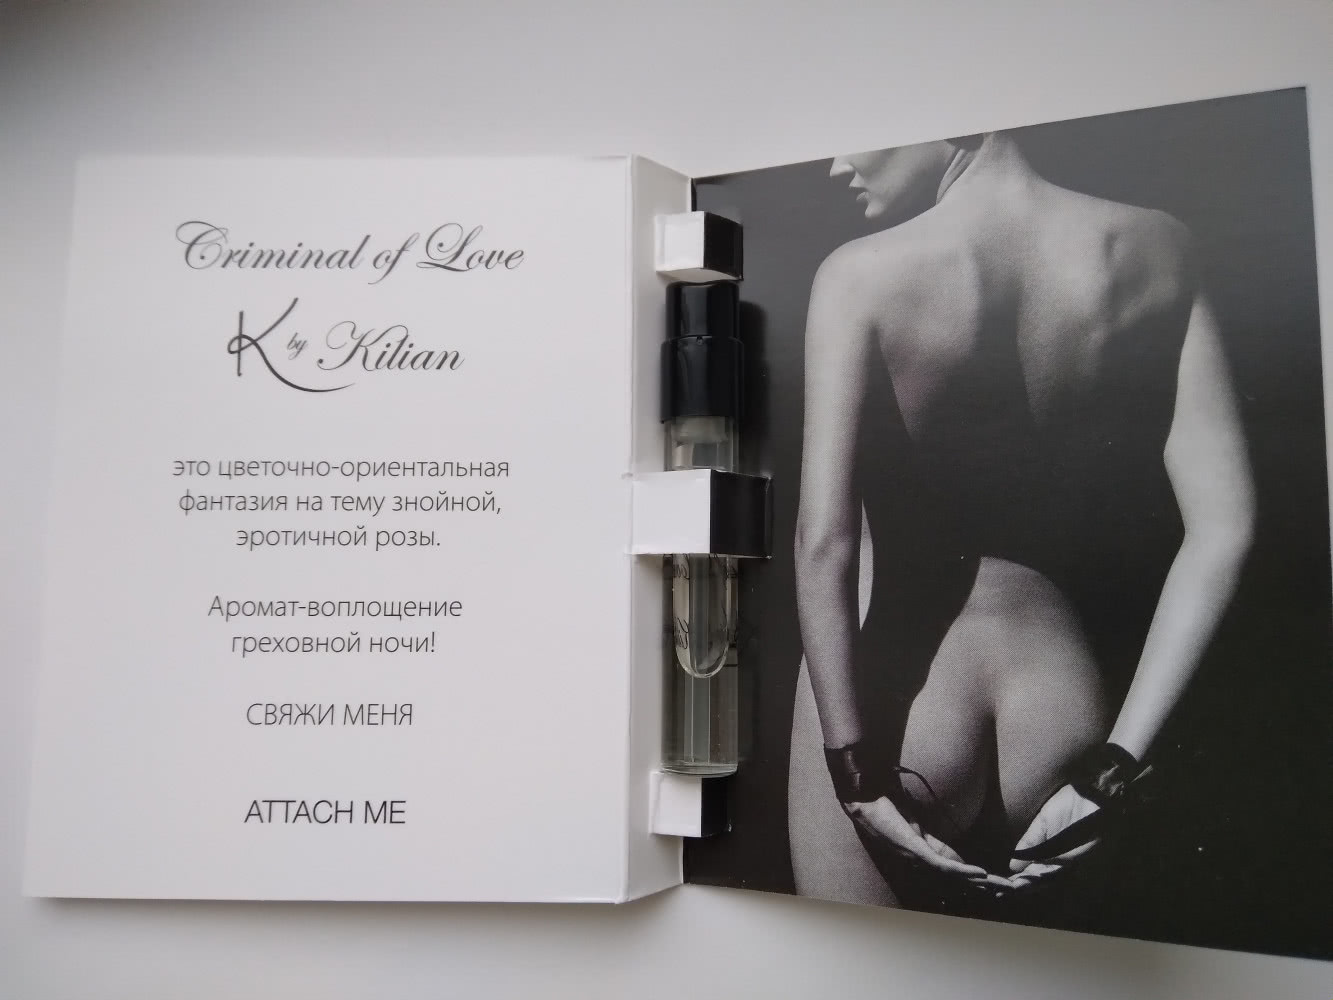 K by kilian criminal of love 1.5 ml